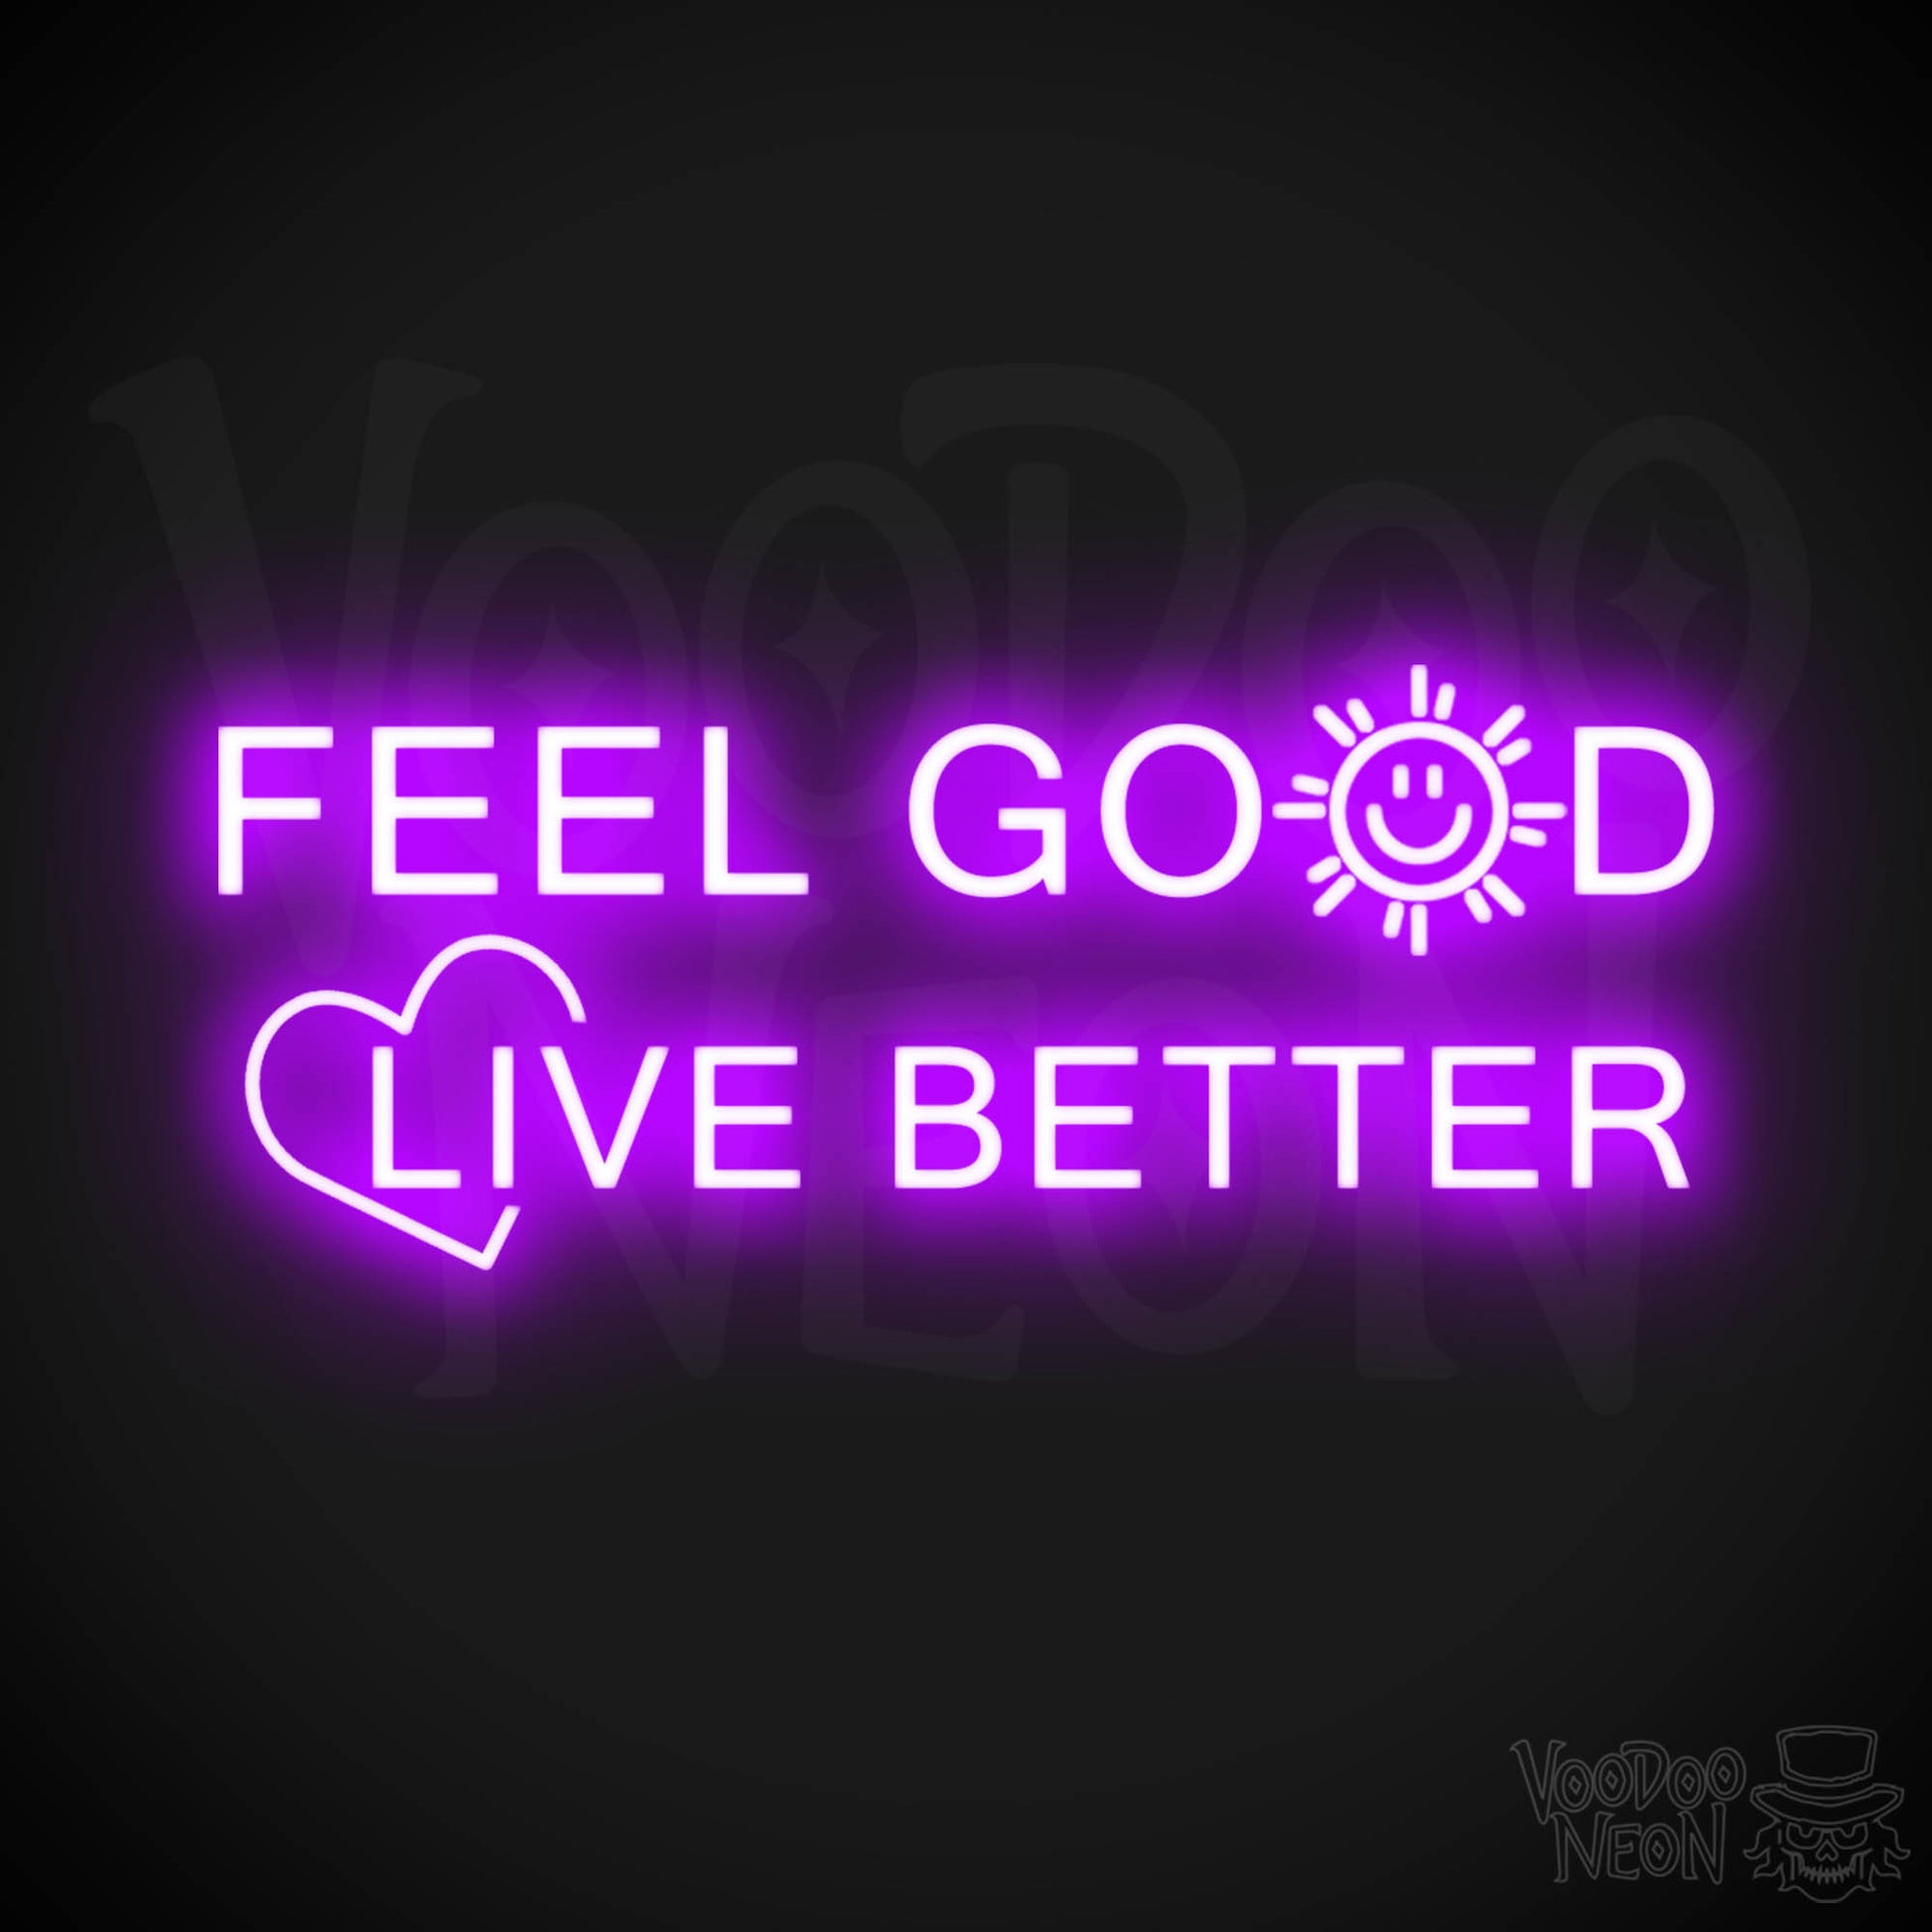 Feel Good Live Better Neon Sign - Feel Good Live Better Sign - Color Purple